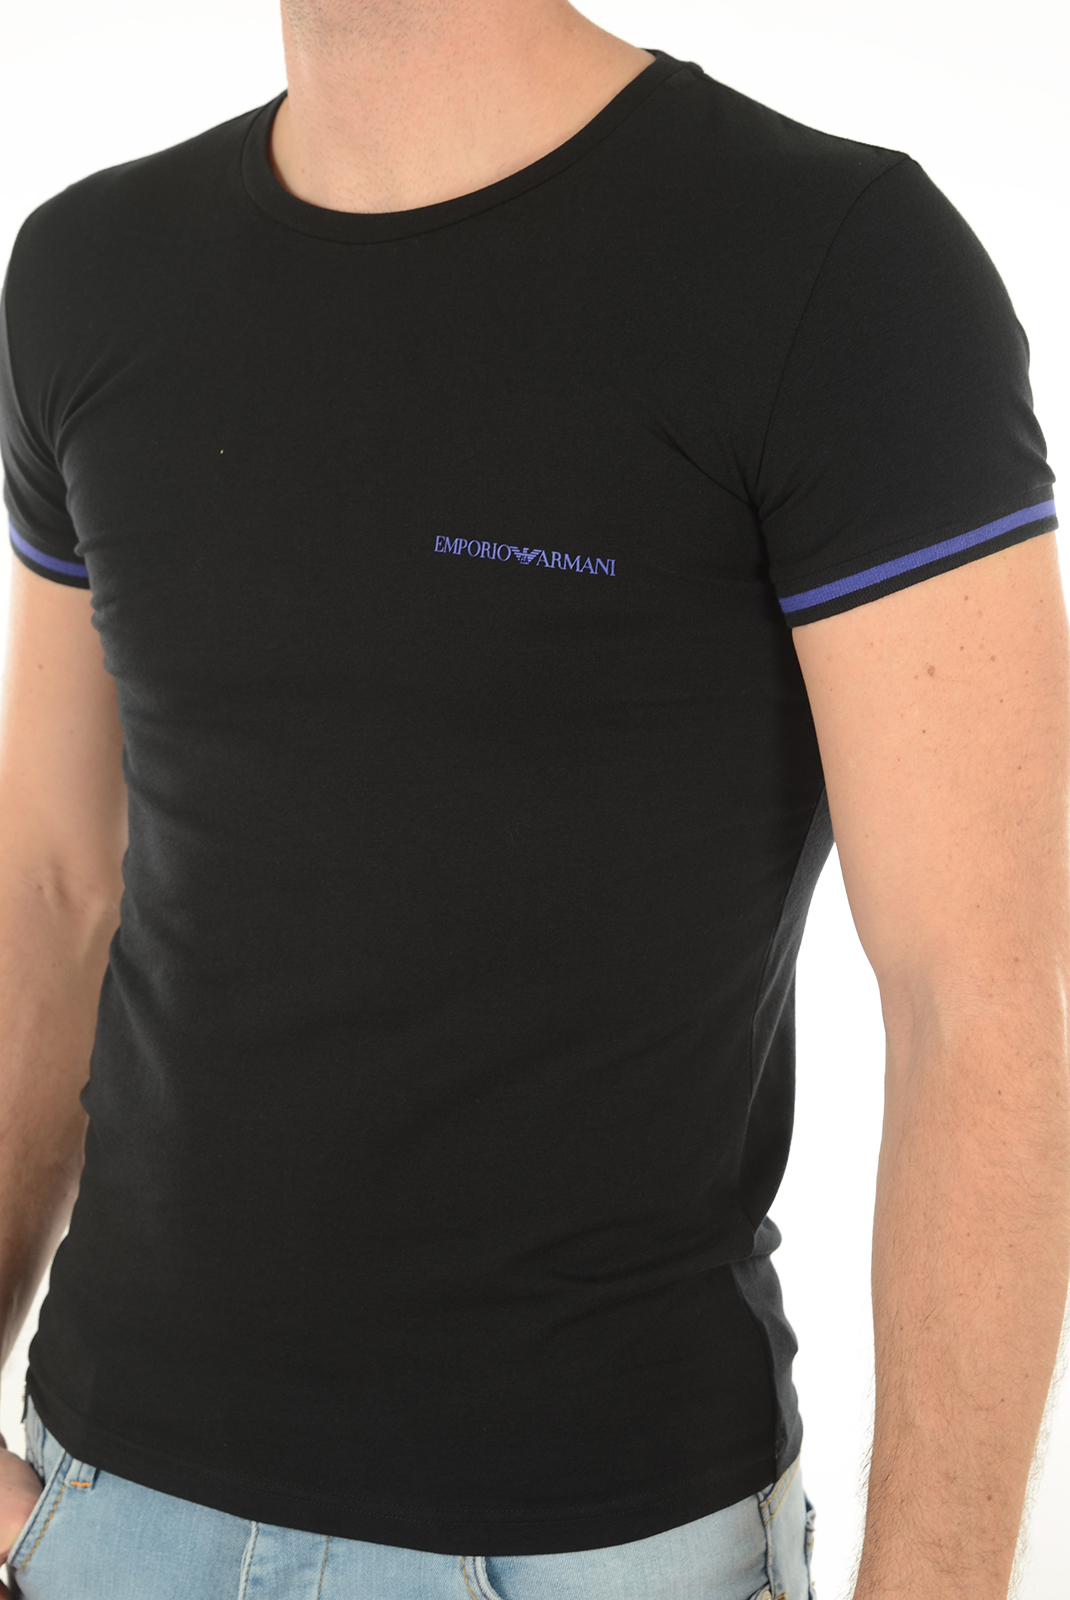 T-Shirt noir stretch homme - Emporio Armani 111035 6A525